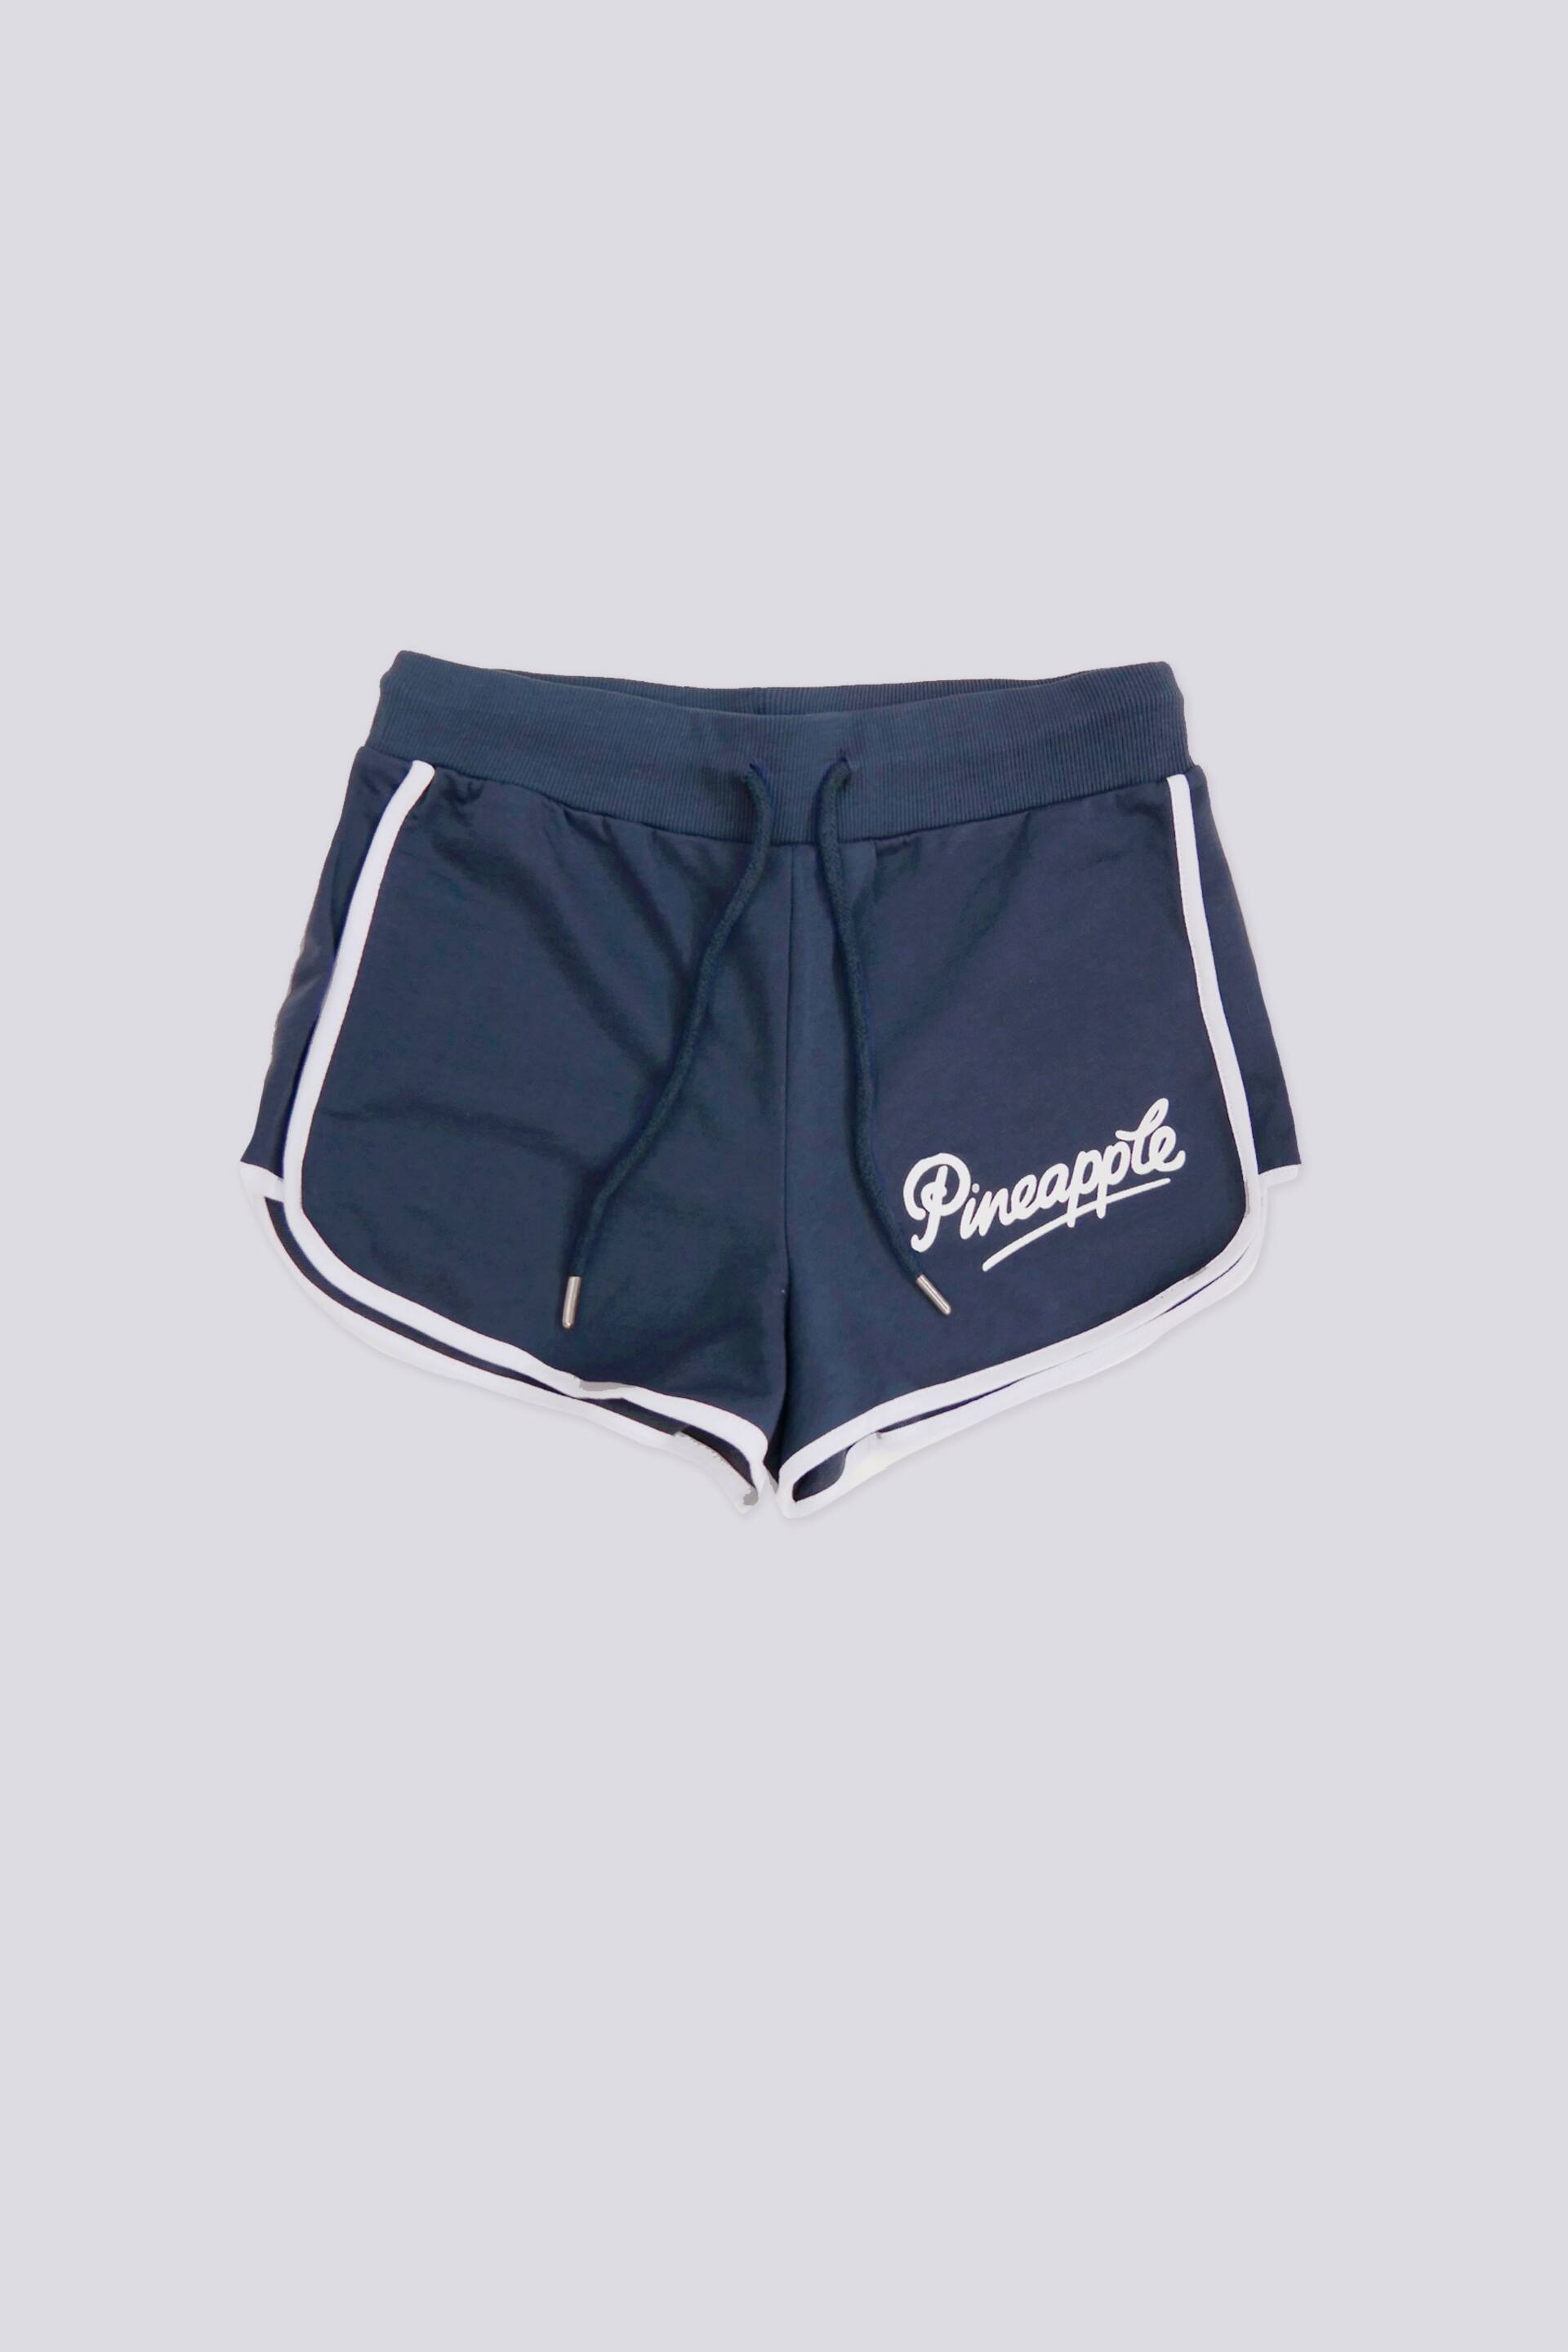 Pineapple Navy Blue Sweat Shorts - Image 5 of 5